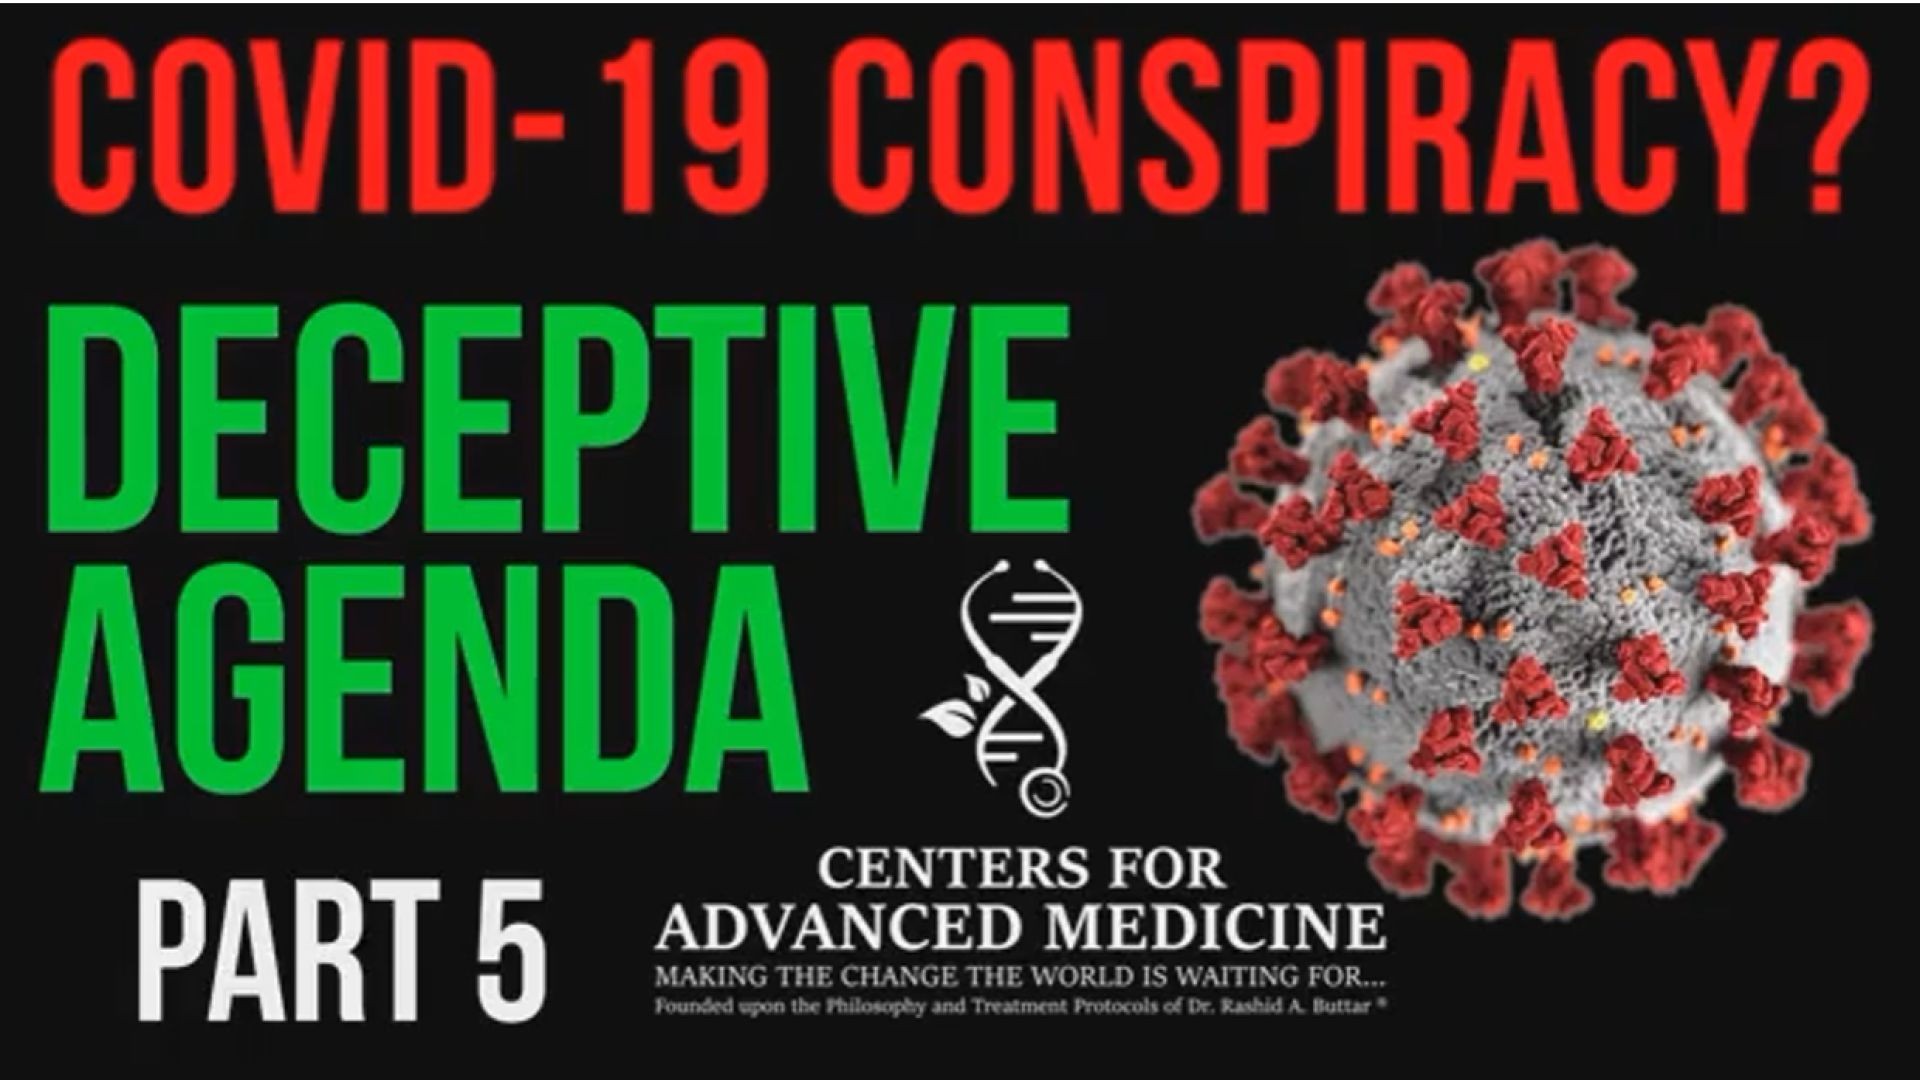 COVID-19 - Video 5 -  Virus Conspiracy? Deceptive Agenda, Censorship, : Part 5 - Dr. Rashid A. Butta